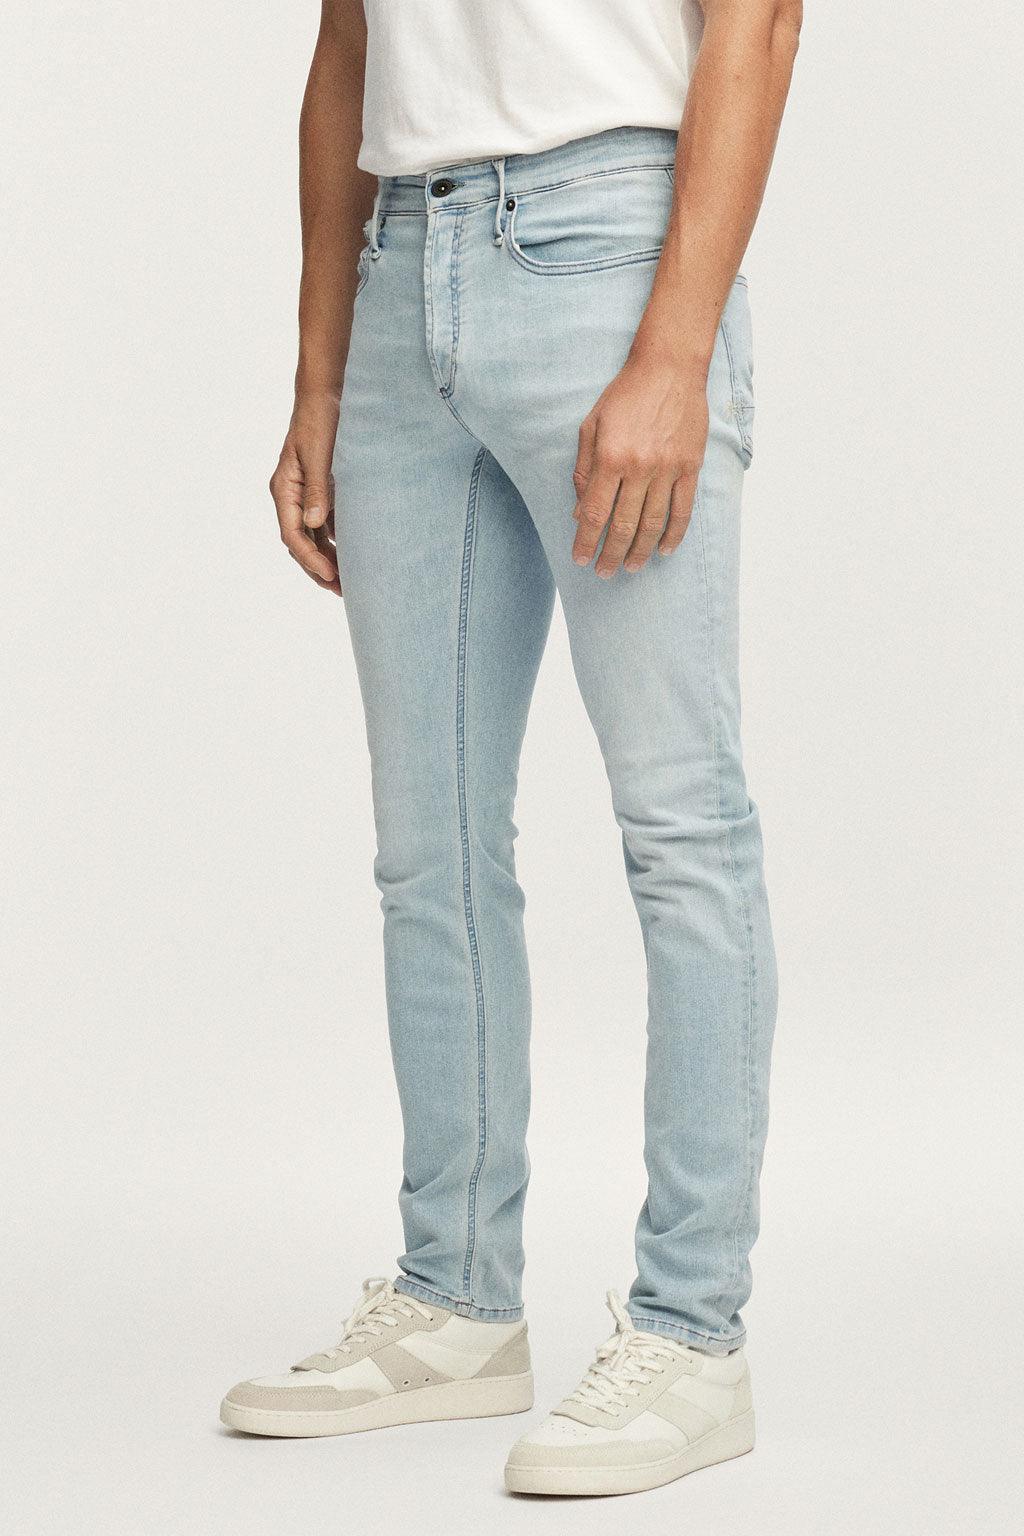 Denham jeans - Big Boss | the menswear concept